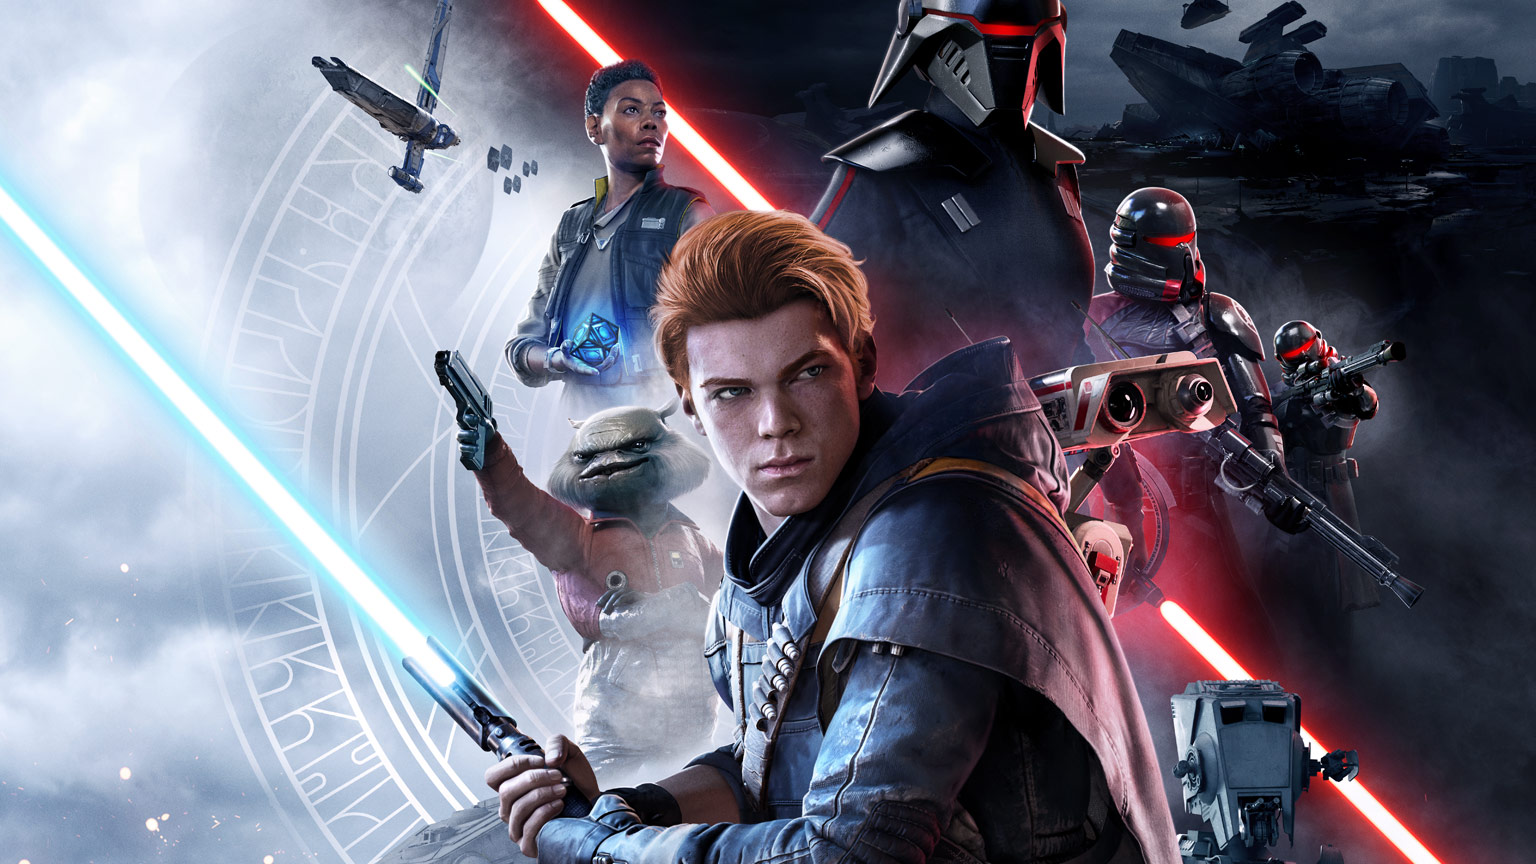 E3 2019: Watch the first gameplay demo of Star Wars Jedi: Fallen Order